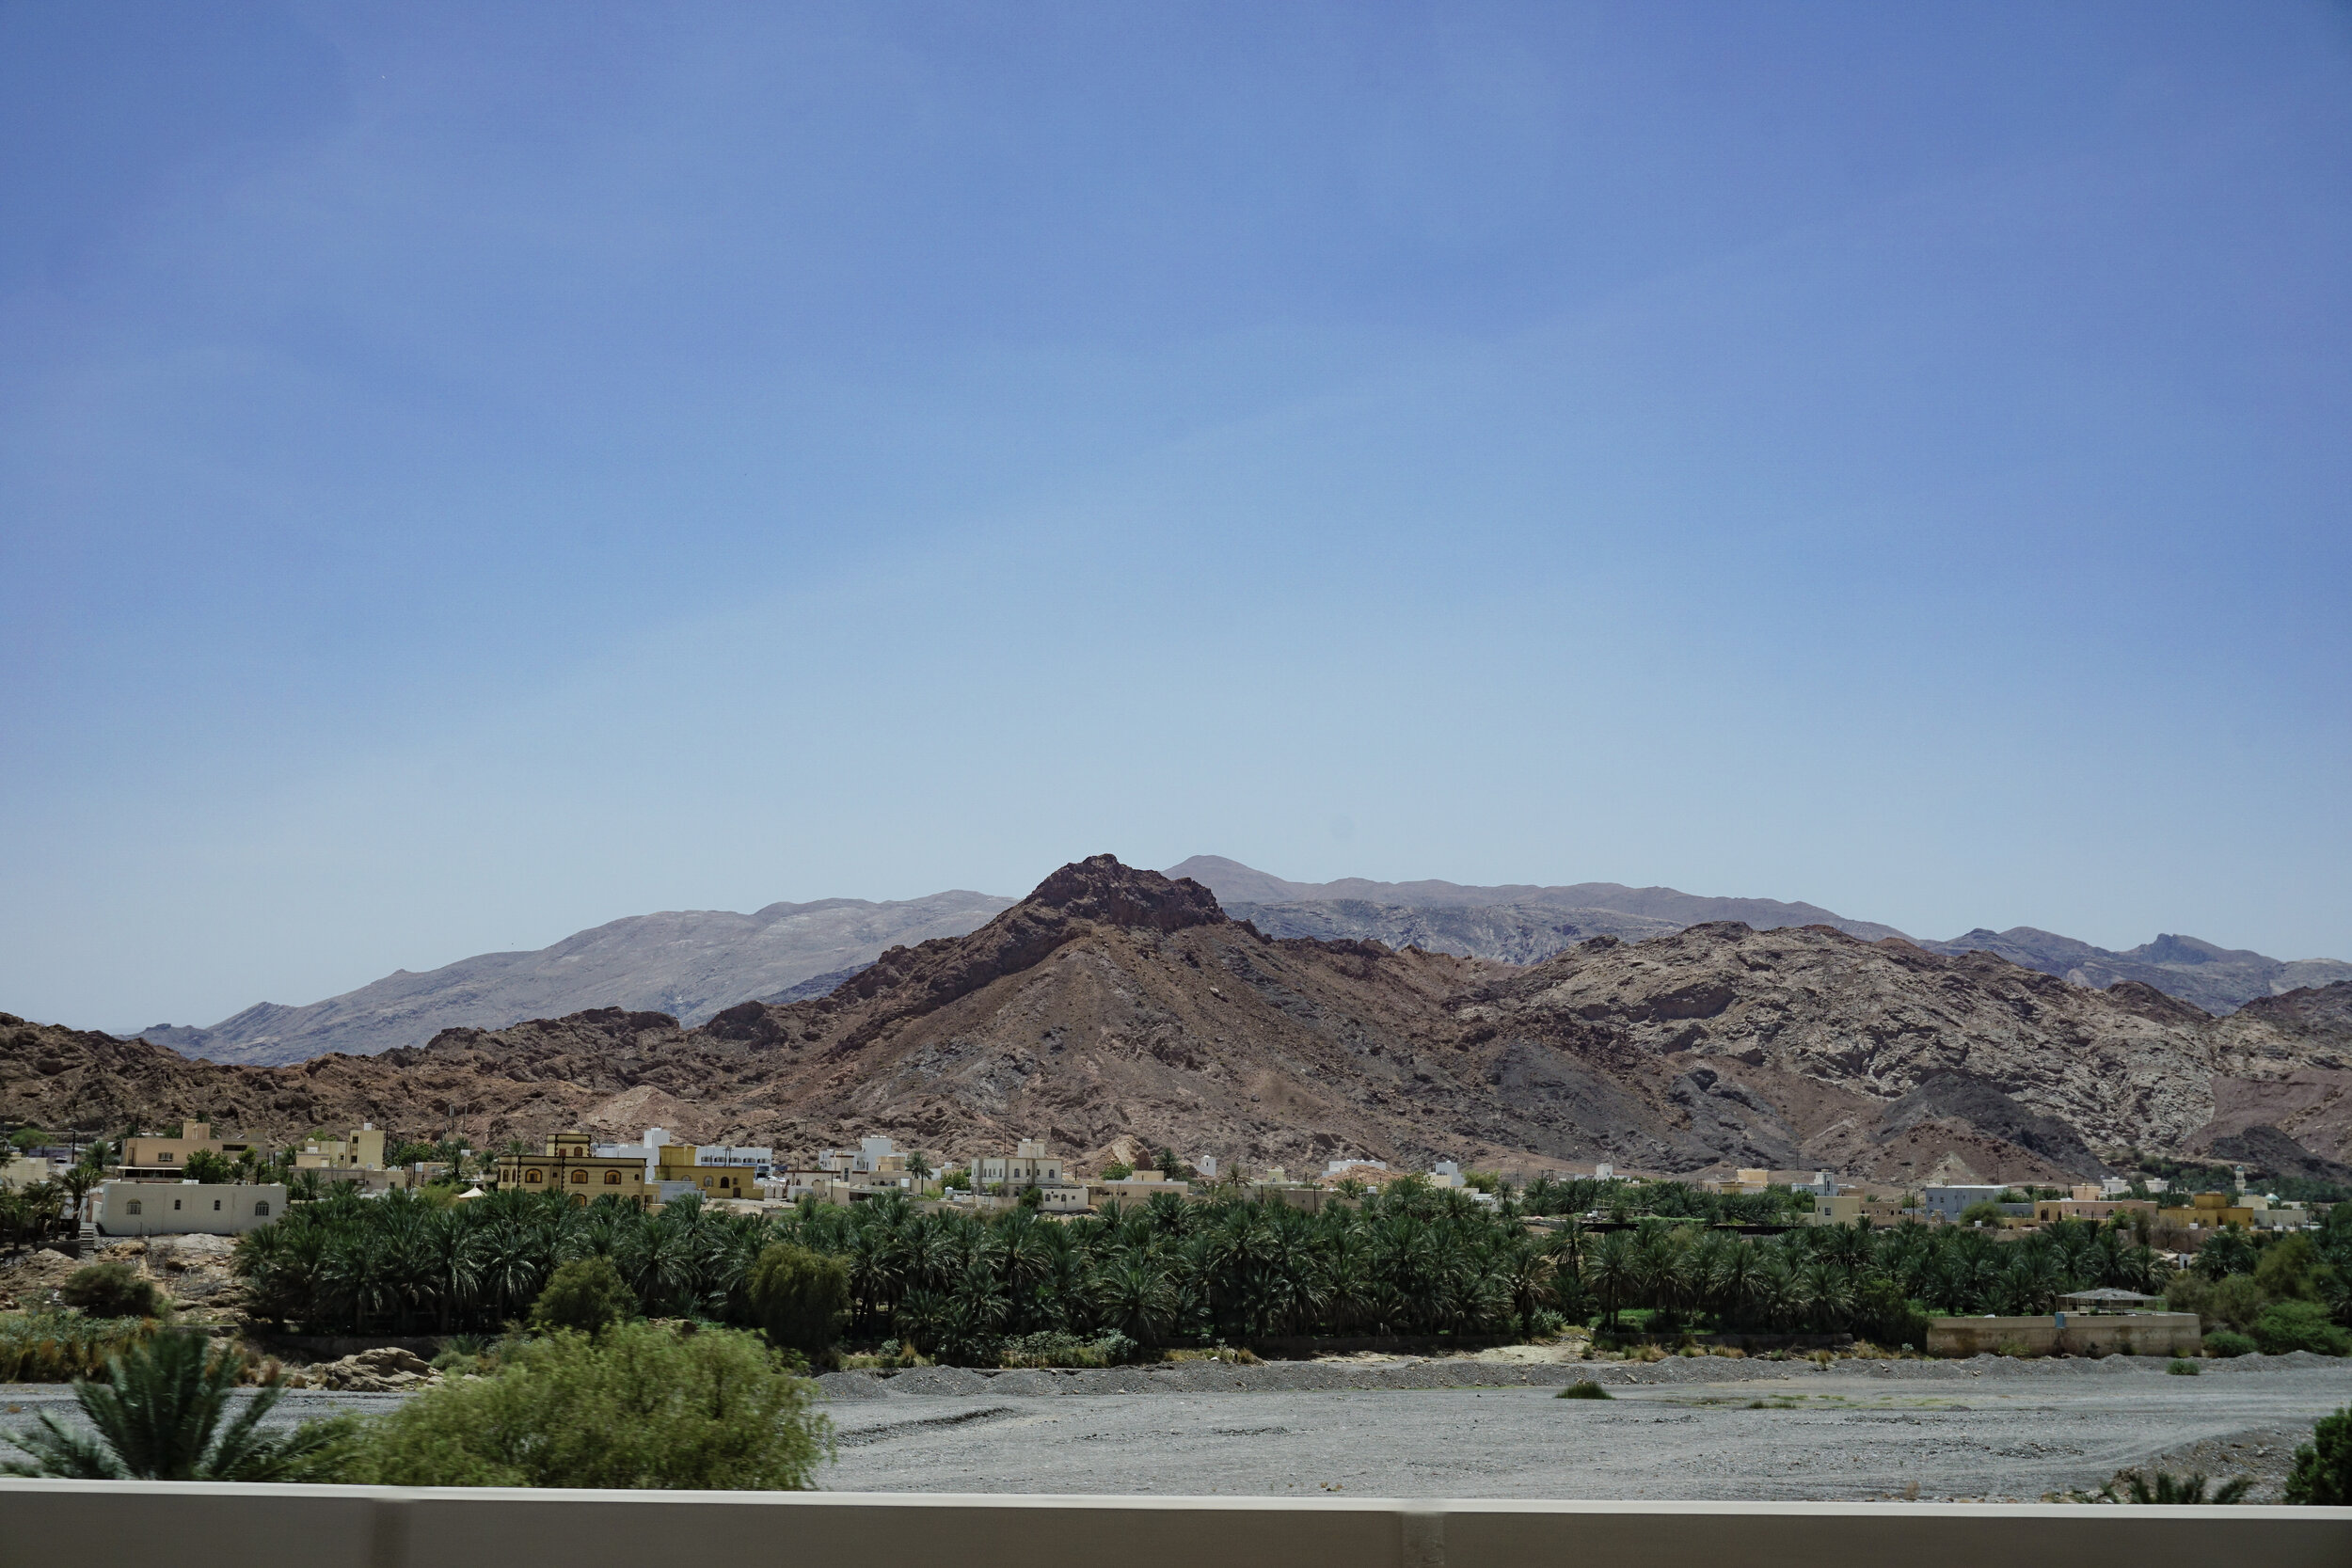 Omani-houses-among-palm-trees-and-rocky-mountains.jpg